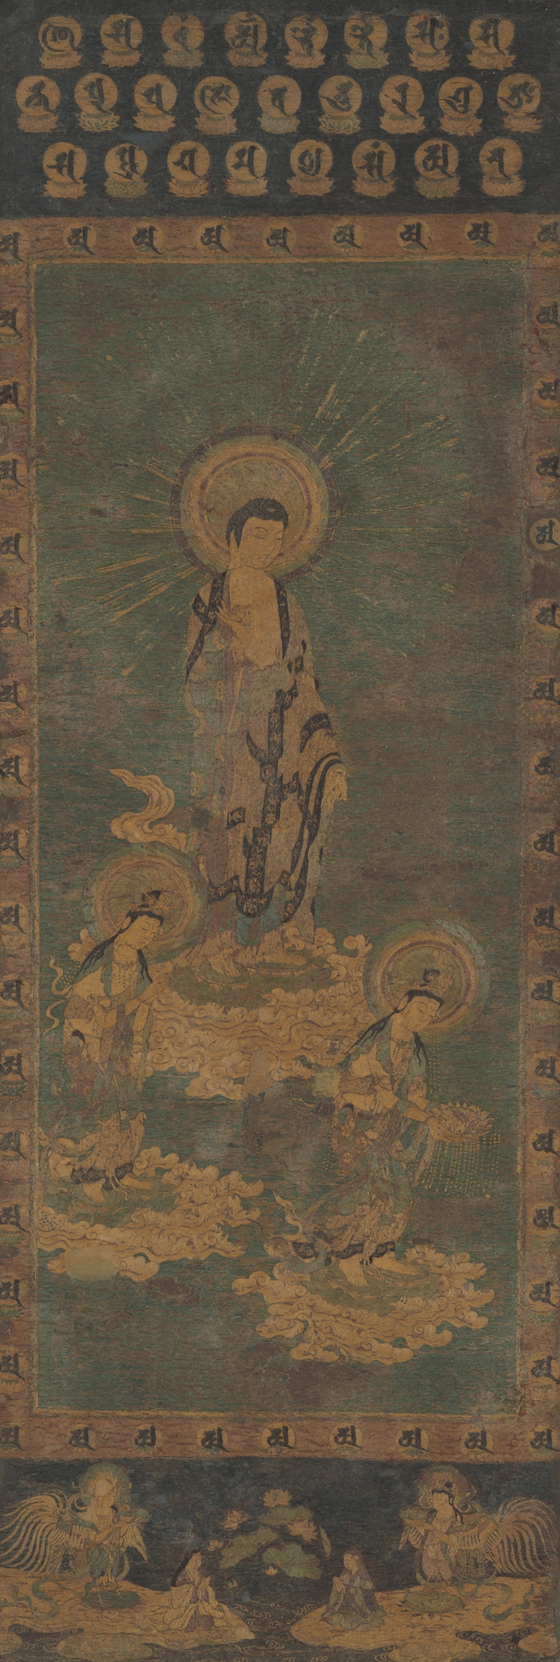 ″Welcoming Descent of Amitabha Buddha Triad″ (13th-14th c.) [HOAM MUSEUM OF ART]